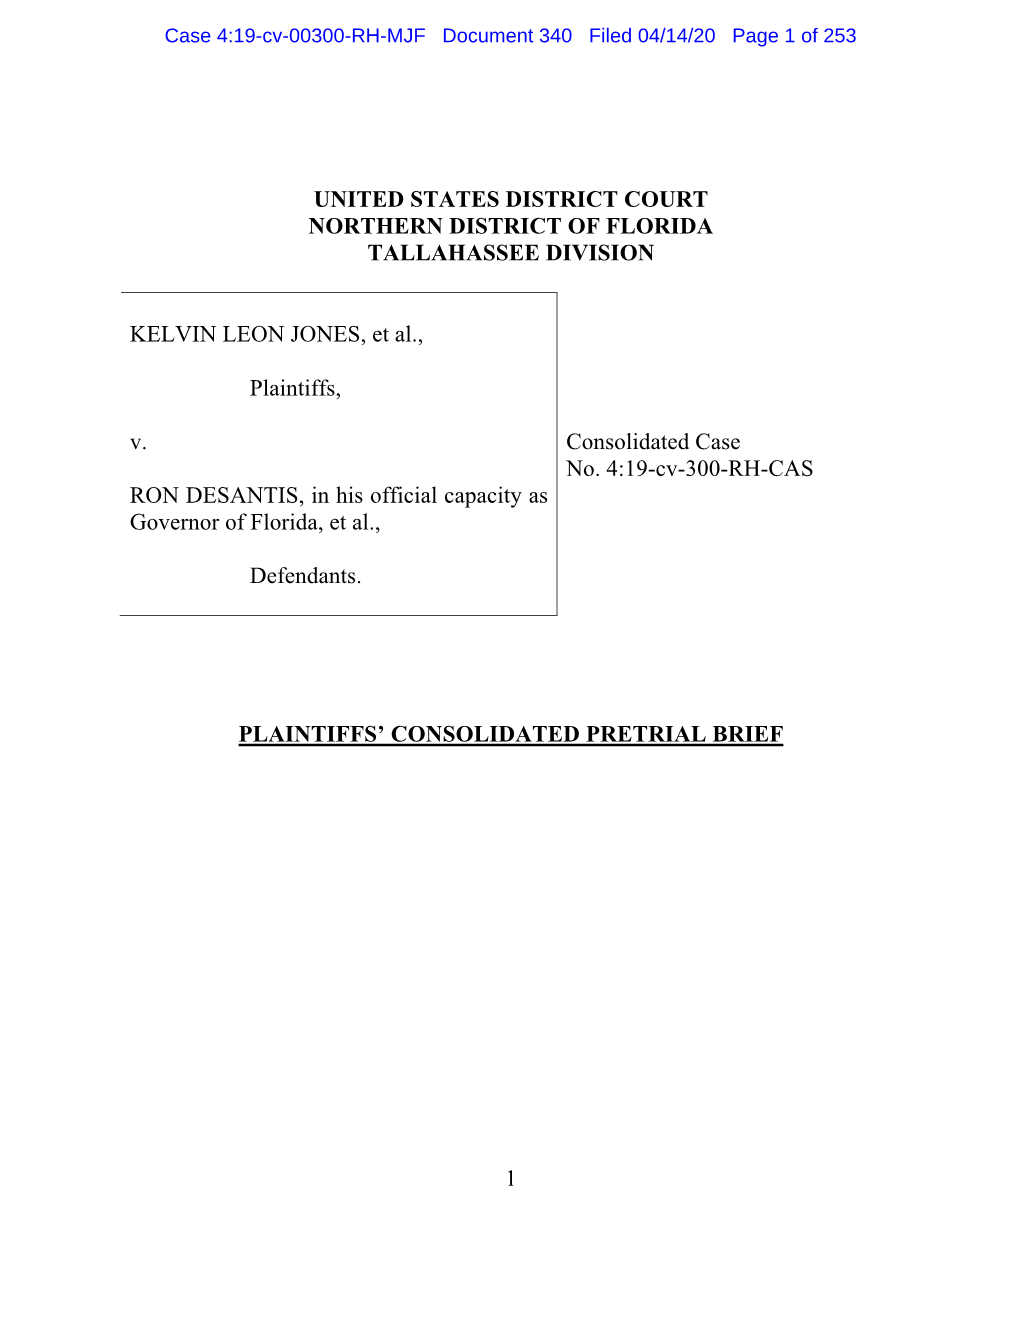 Case 4:19-Cv-00300-RH-MJF Document 340 Filed 04/14/20 Page 1 of 253